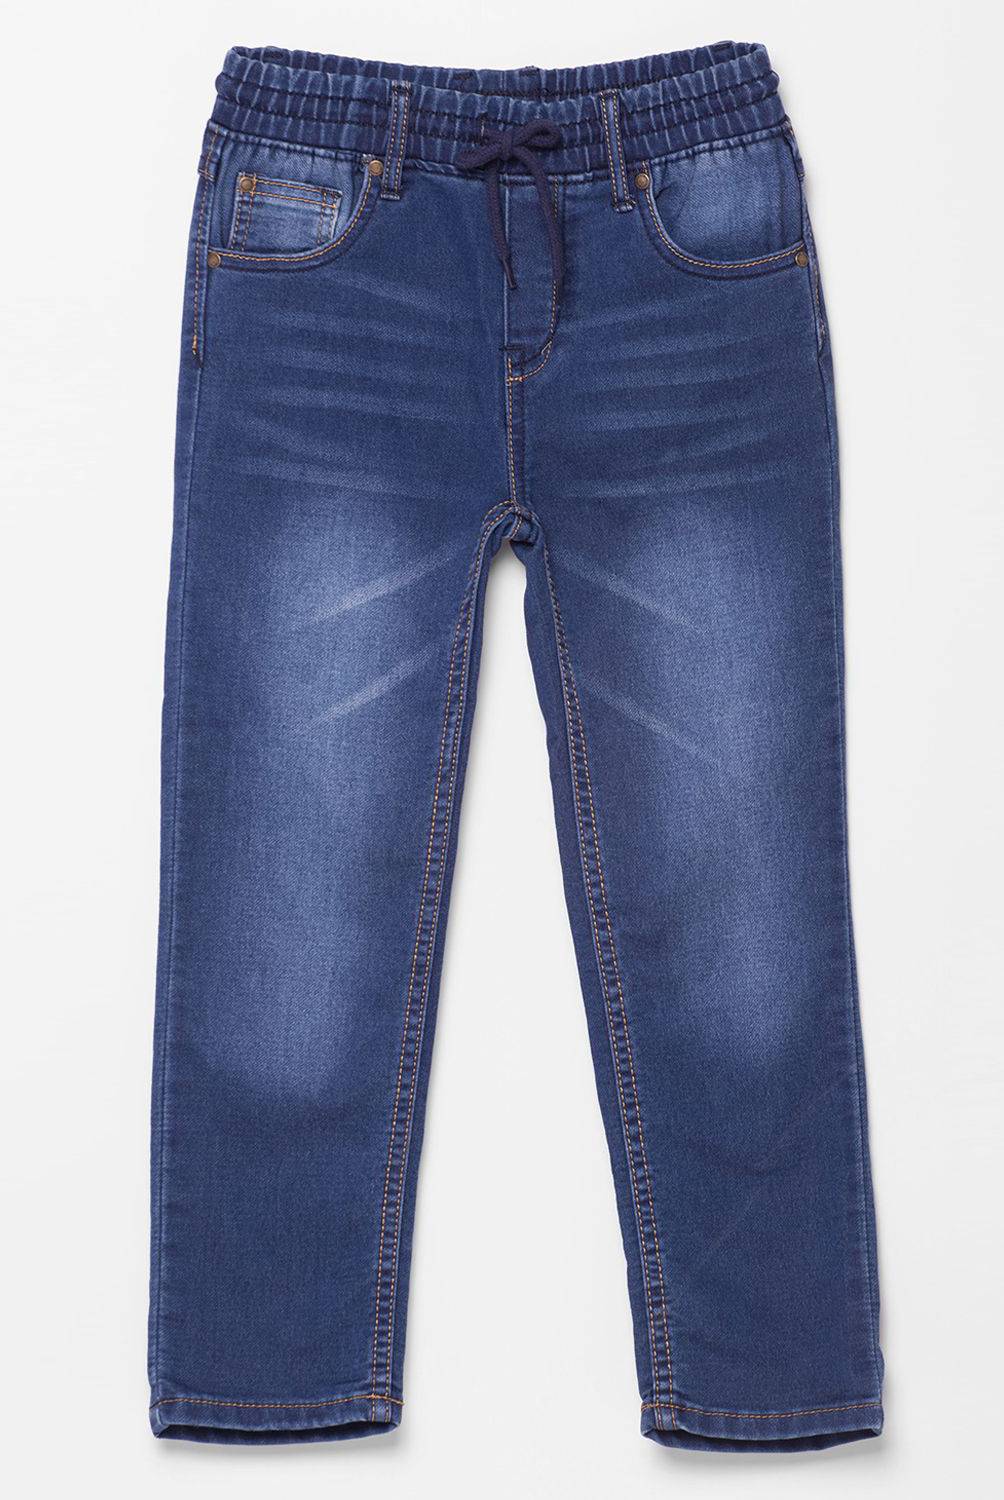 YAMP - Jeans Cintura Elásticada Algodón Niño